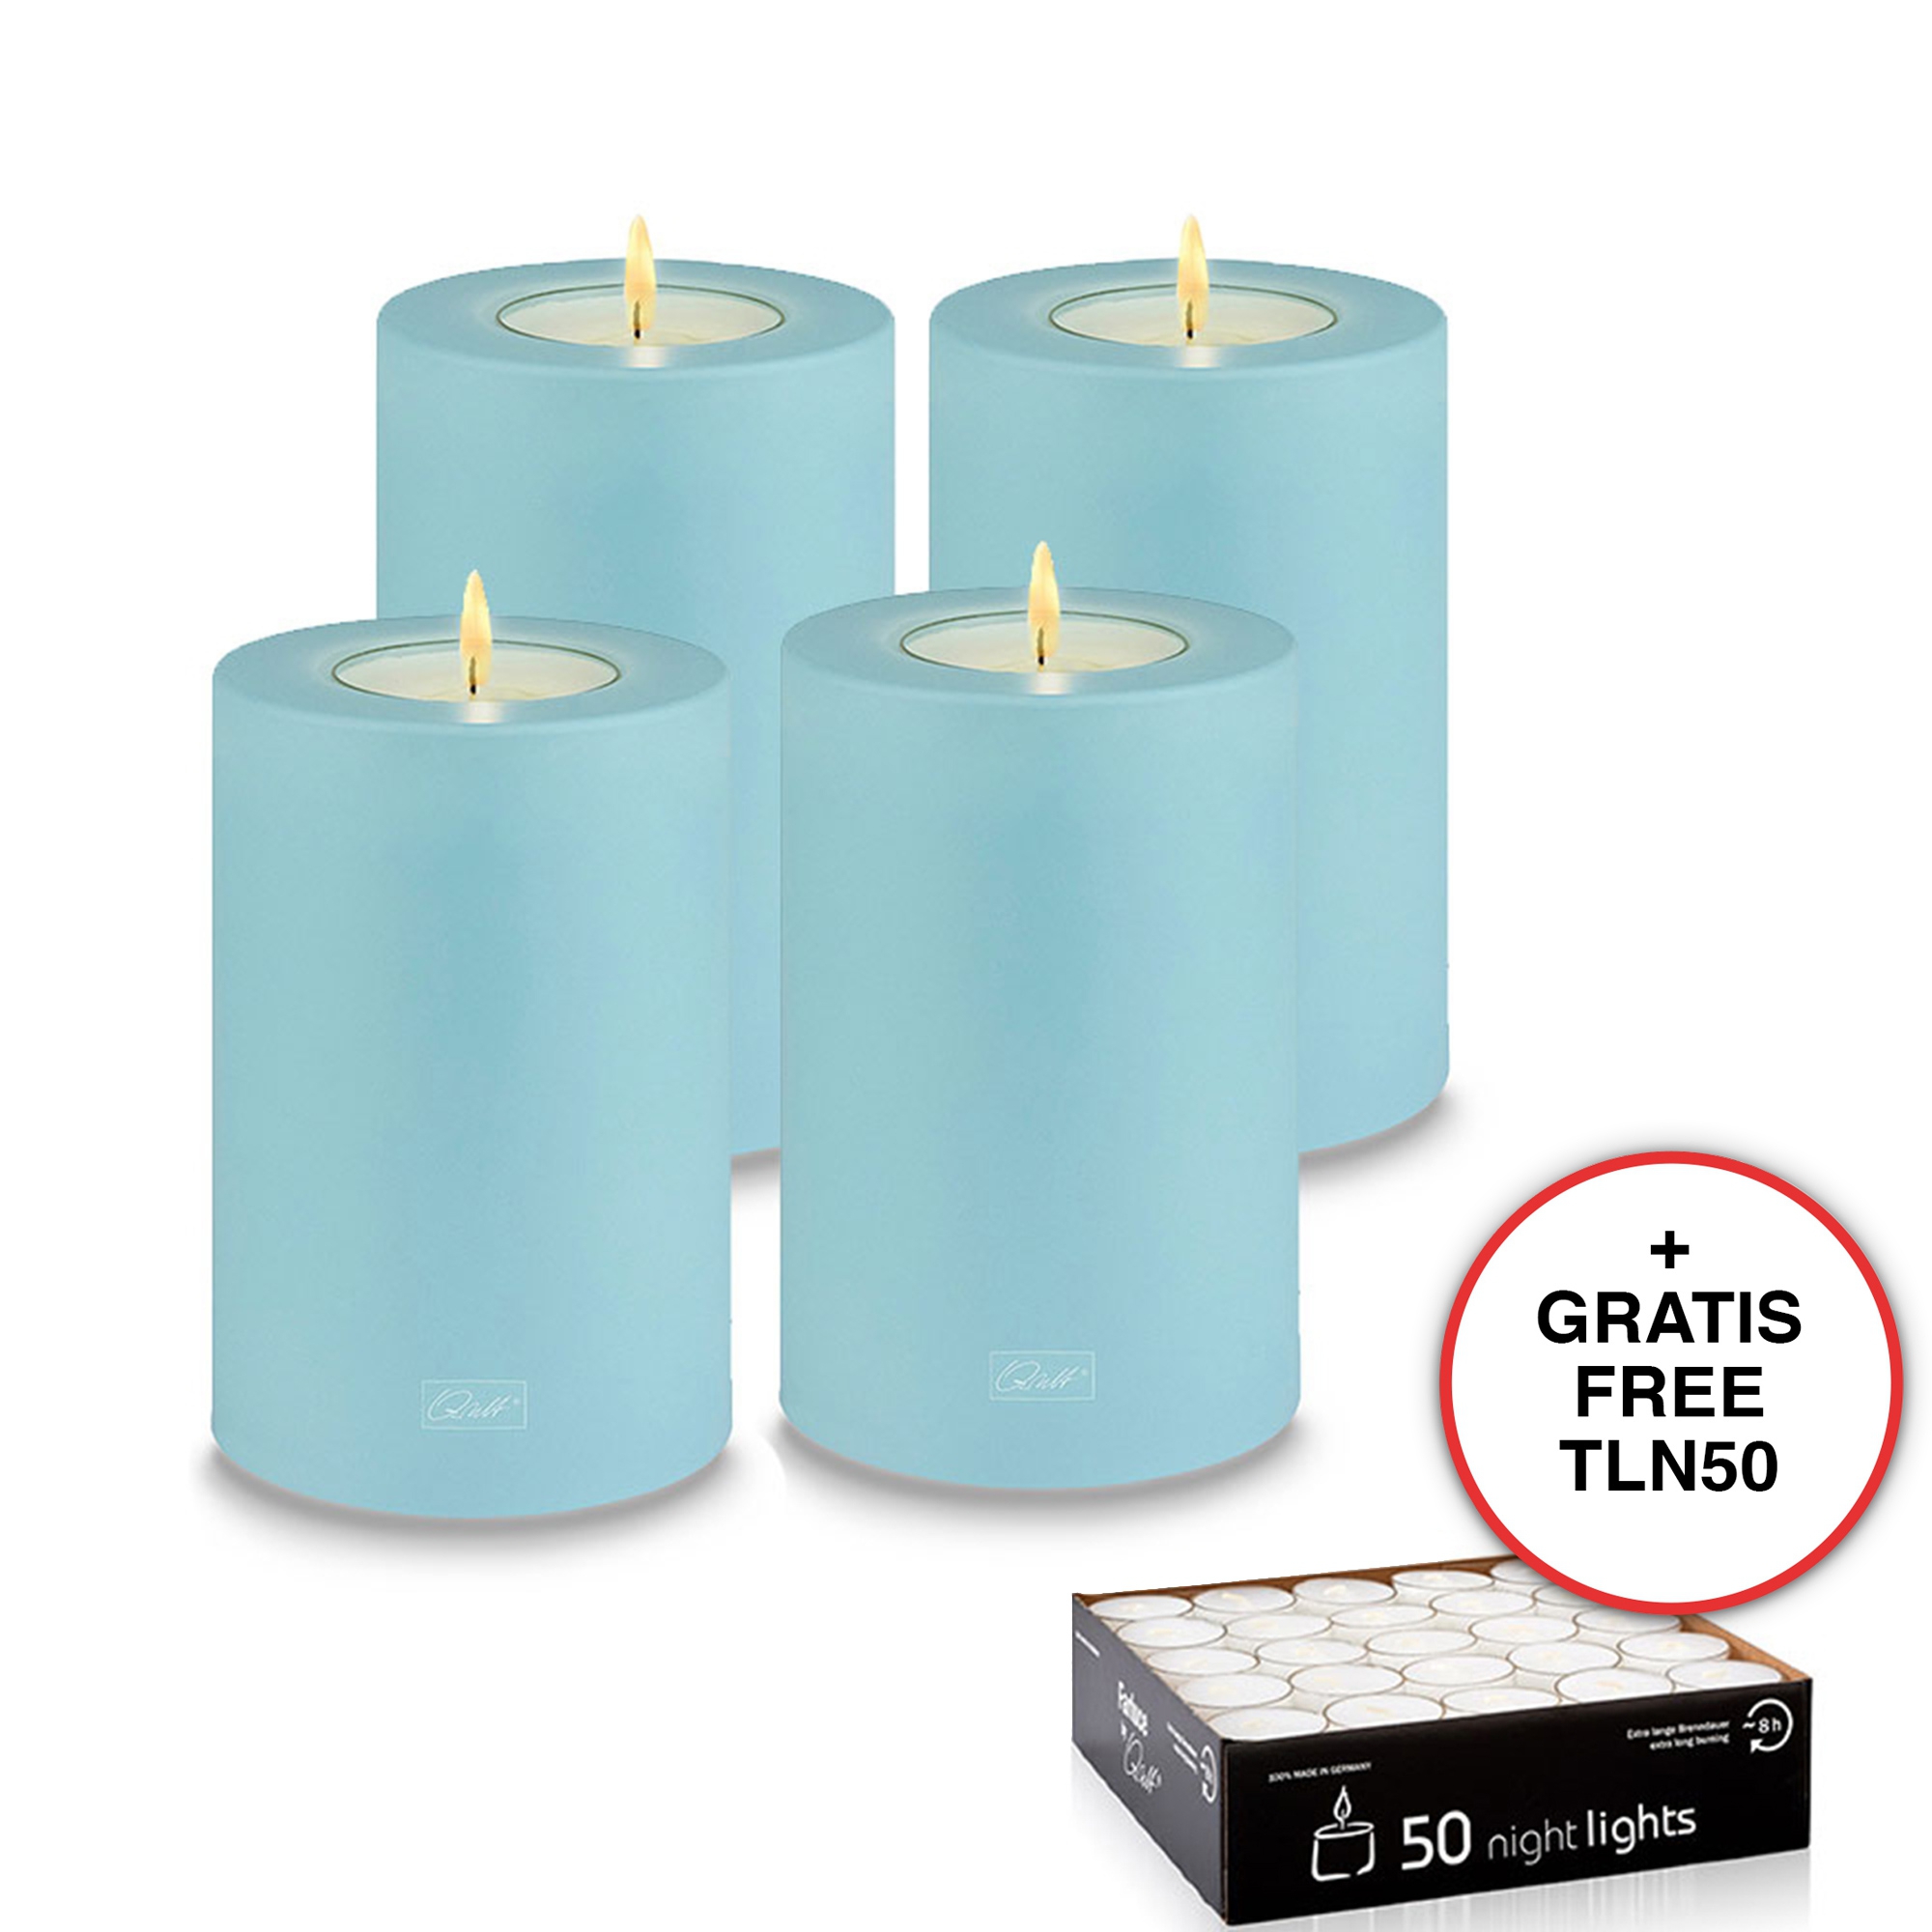 Qult Farluce Trend - Tealight Candle Holder - clearwater - Ø 8 cm H 12 cm - Set of 4